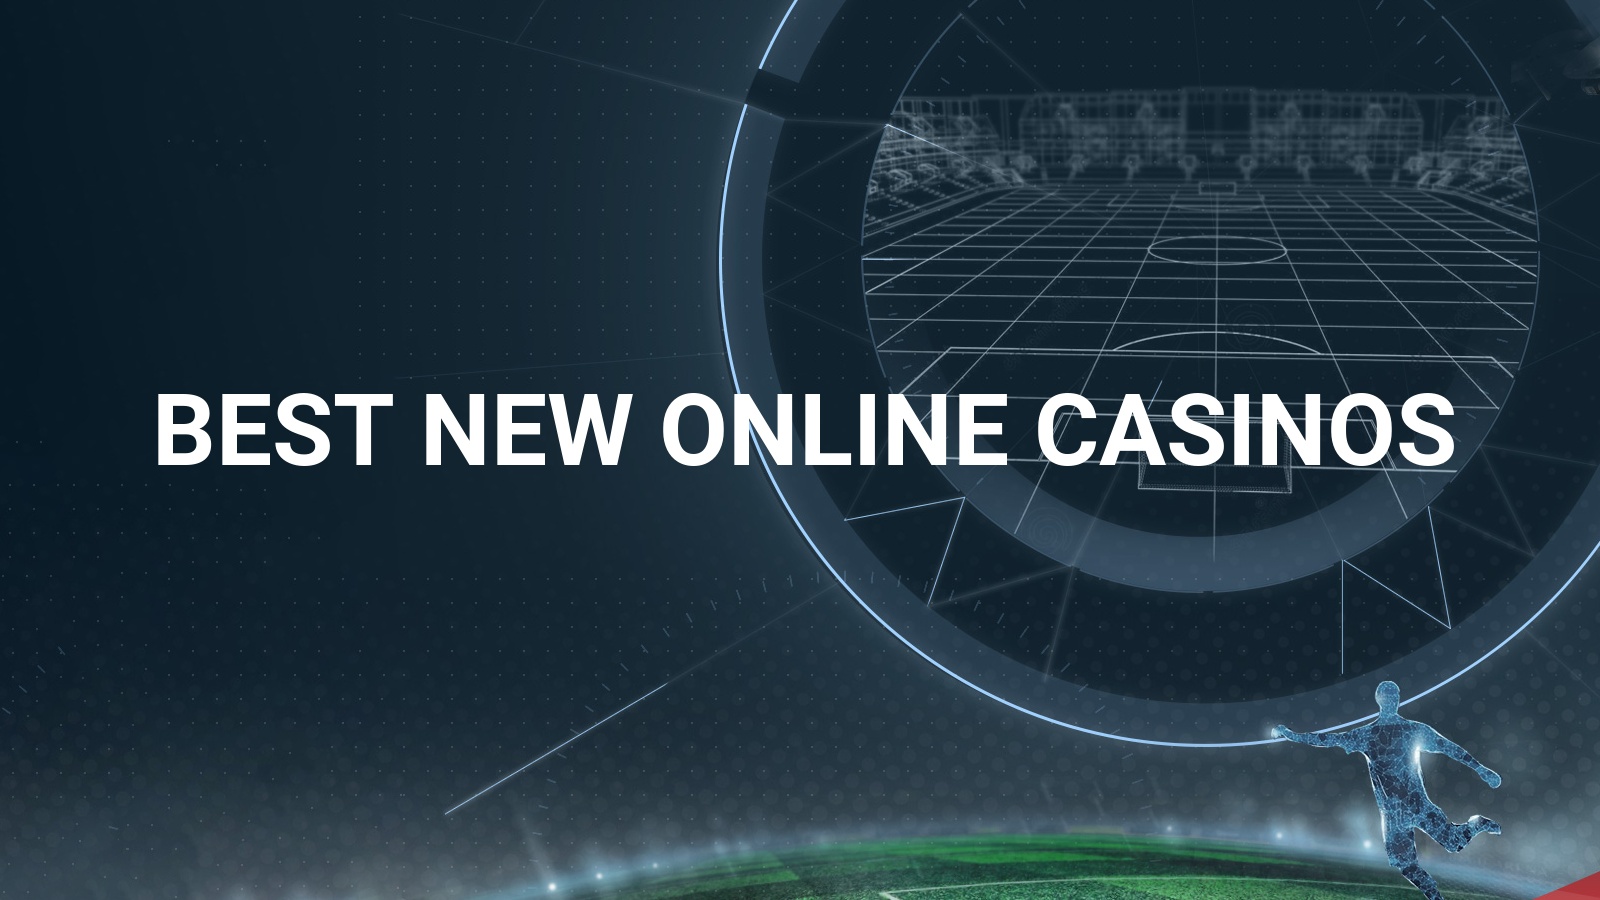 best-new-casino-offers